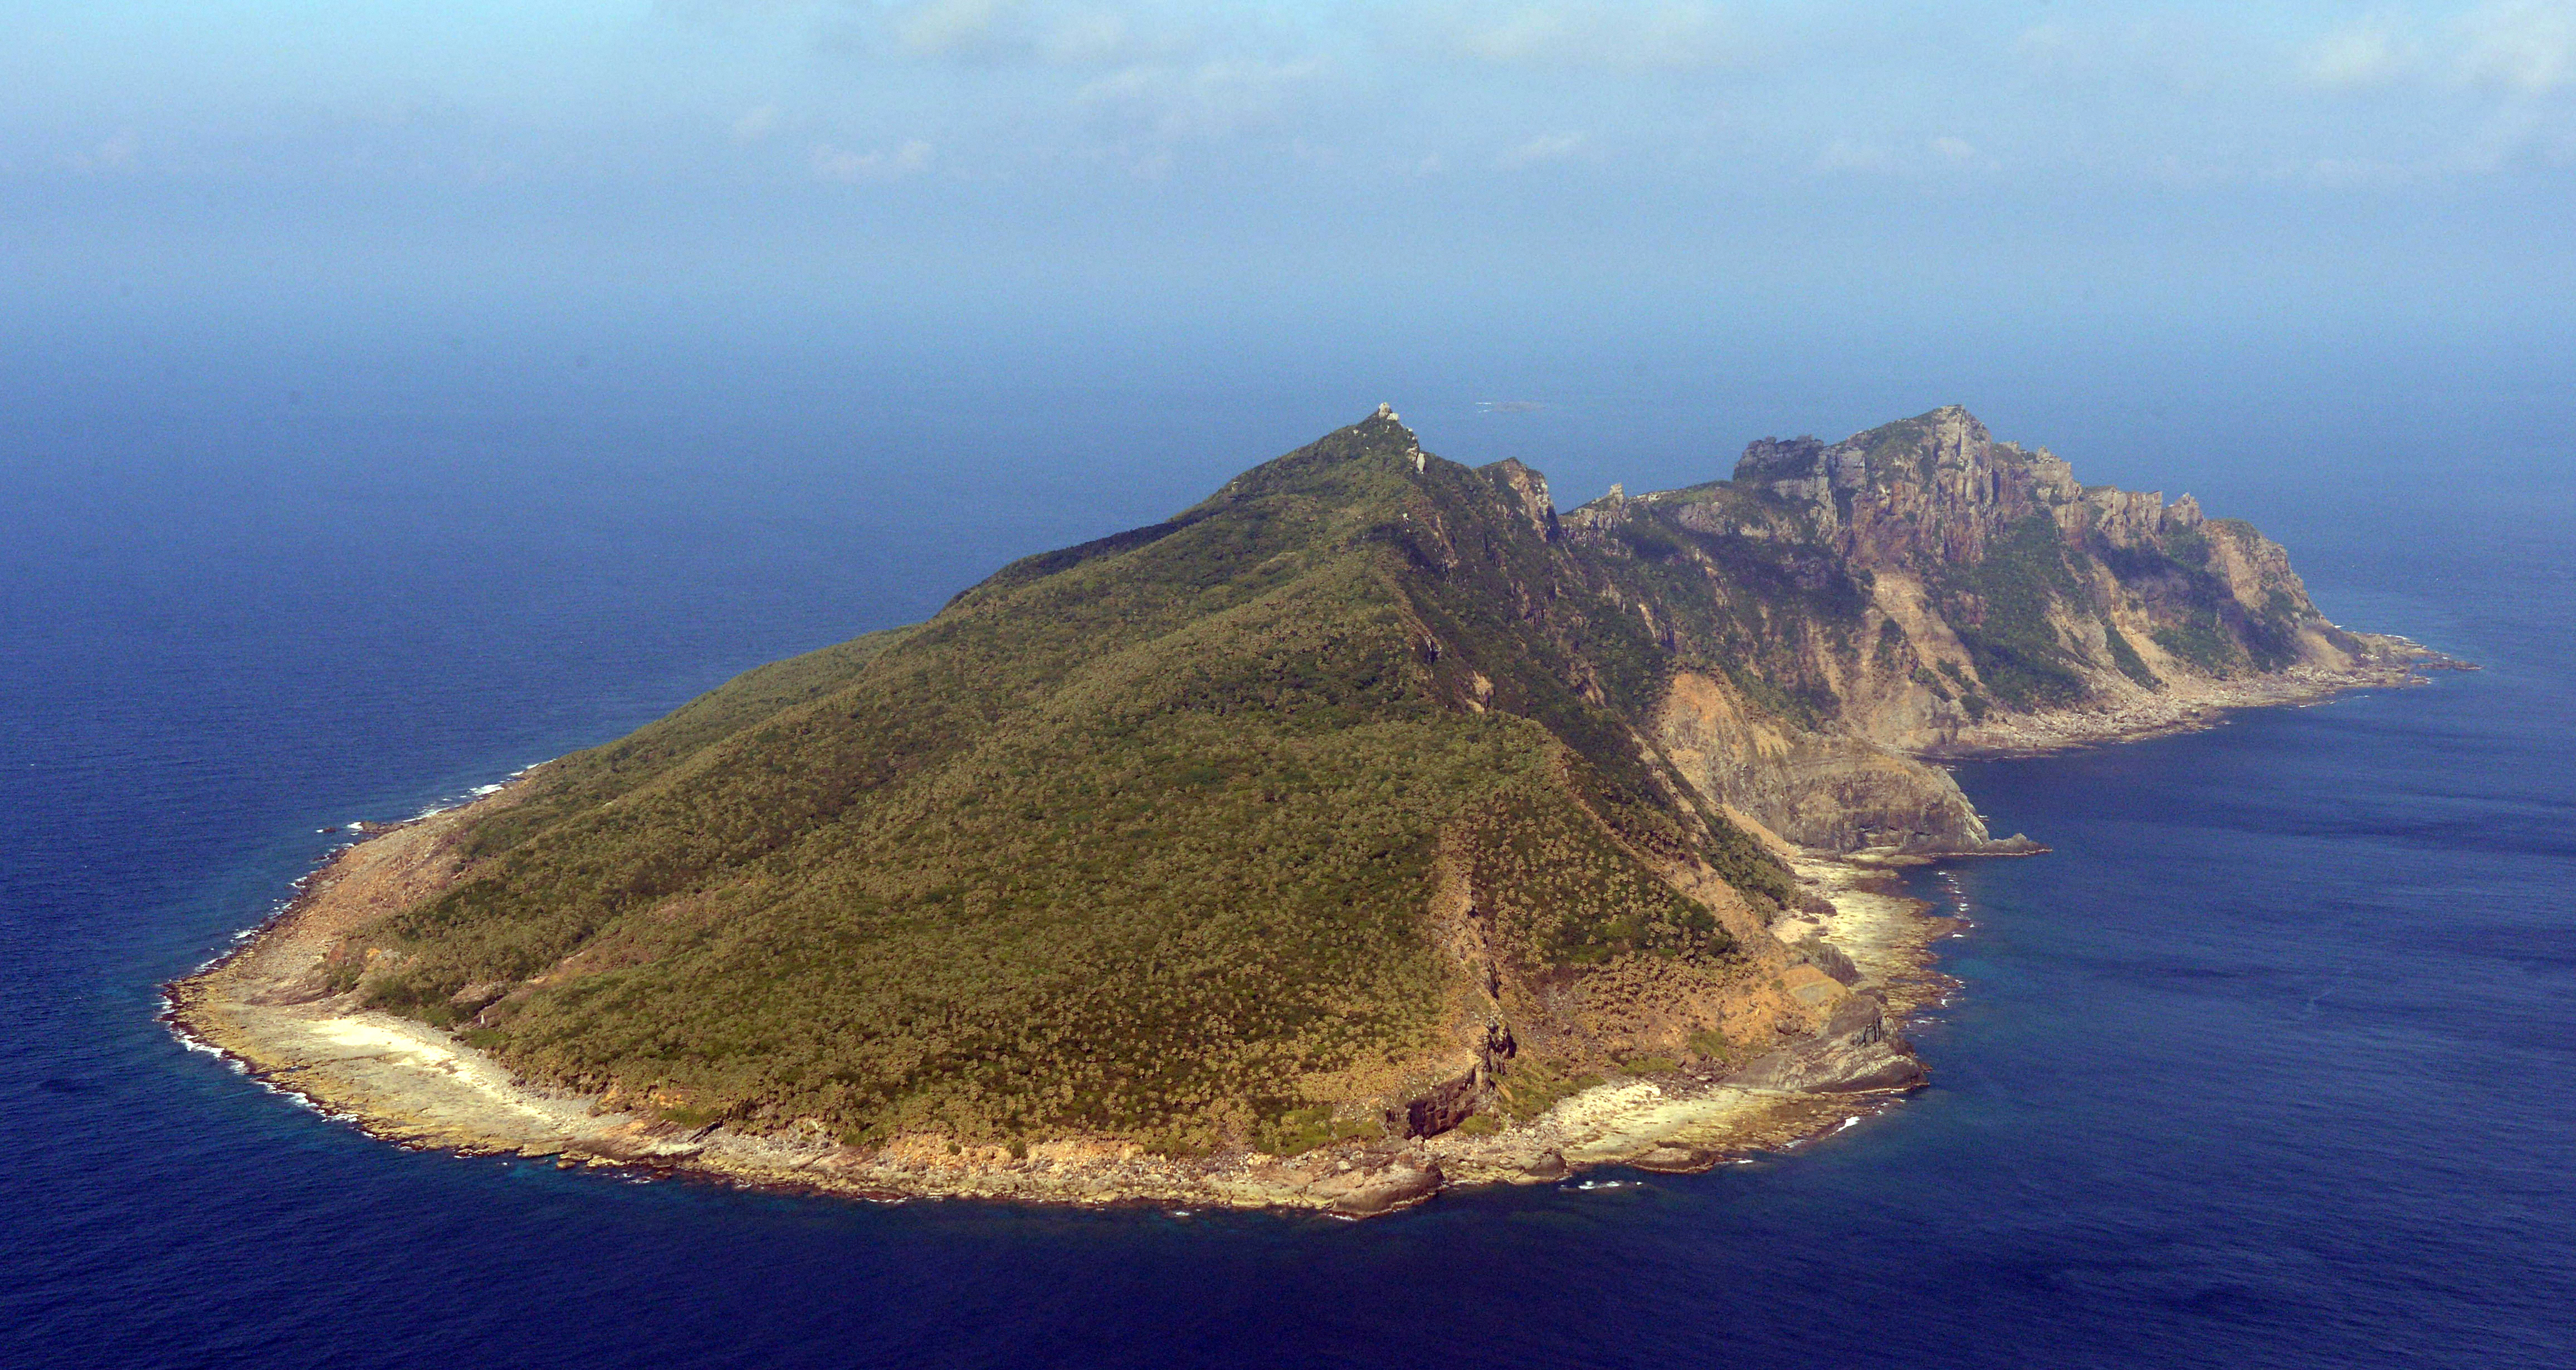 Uotsuri Island